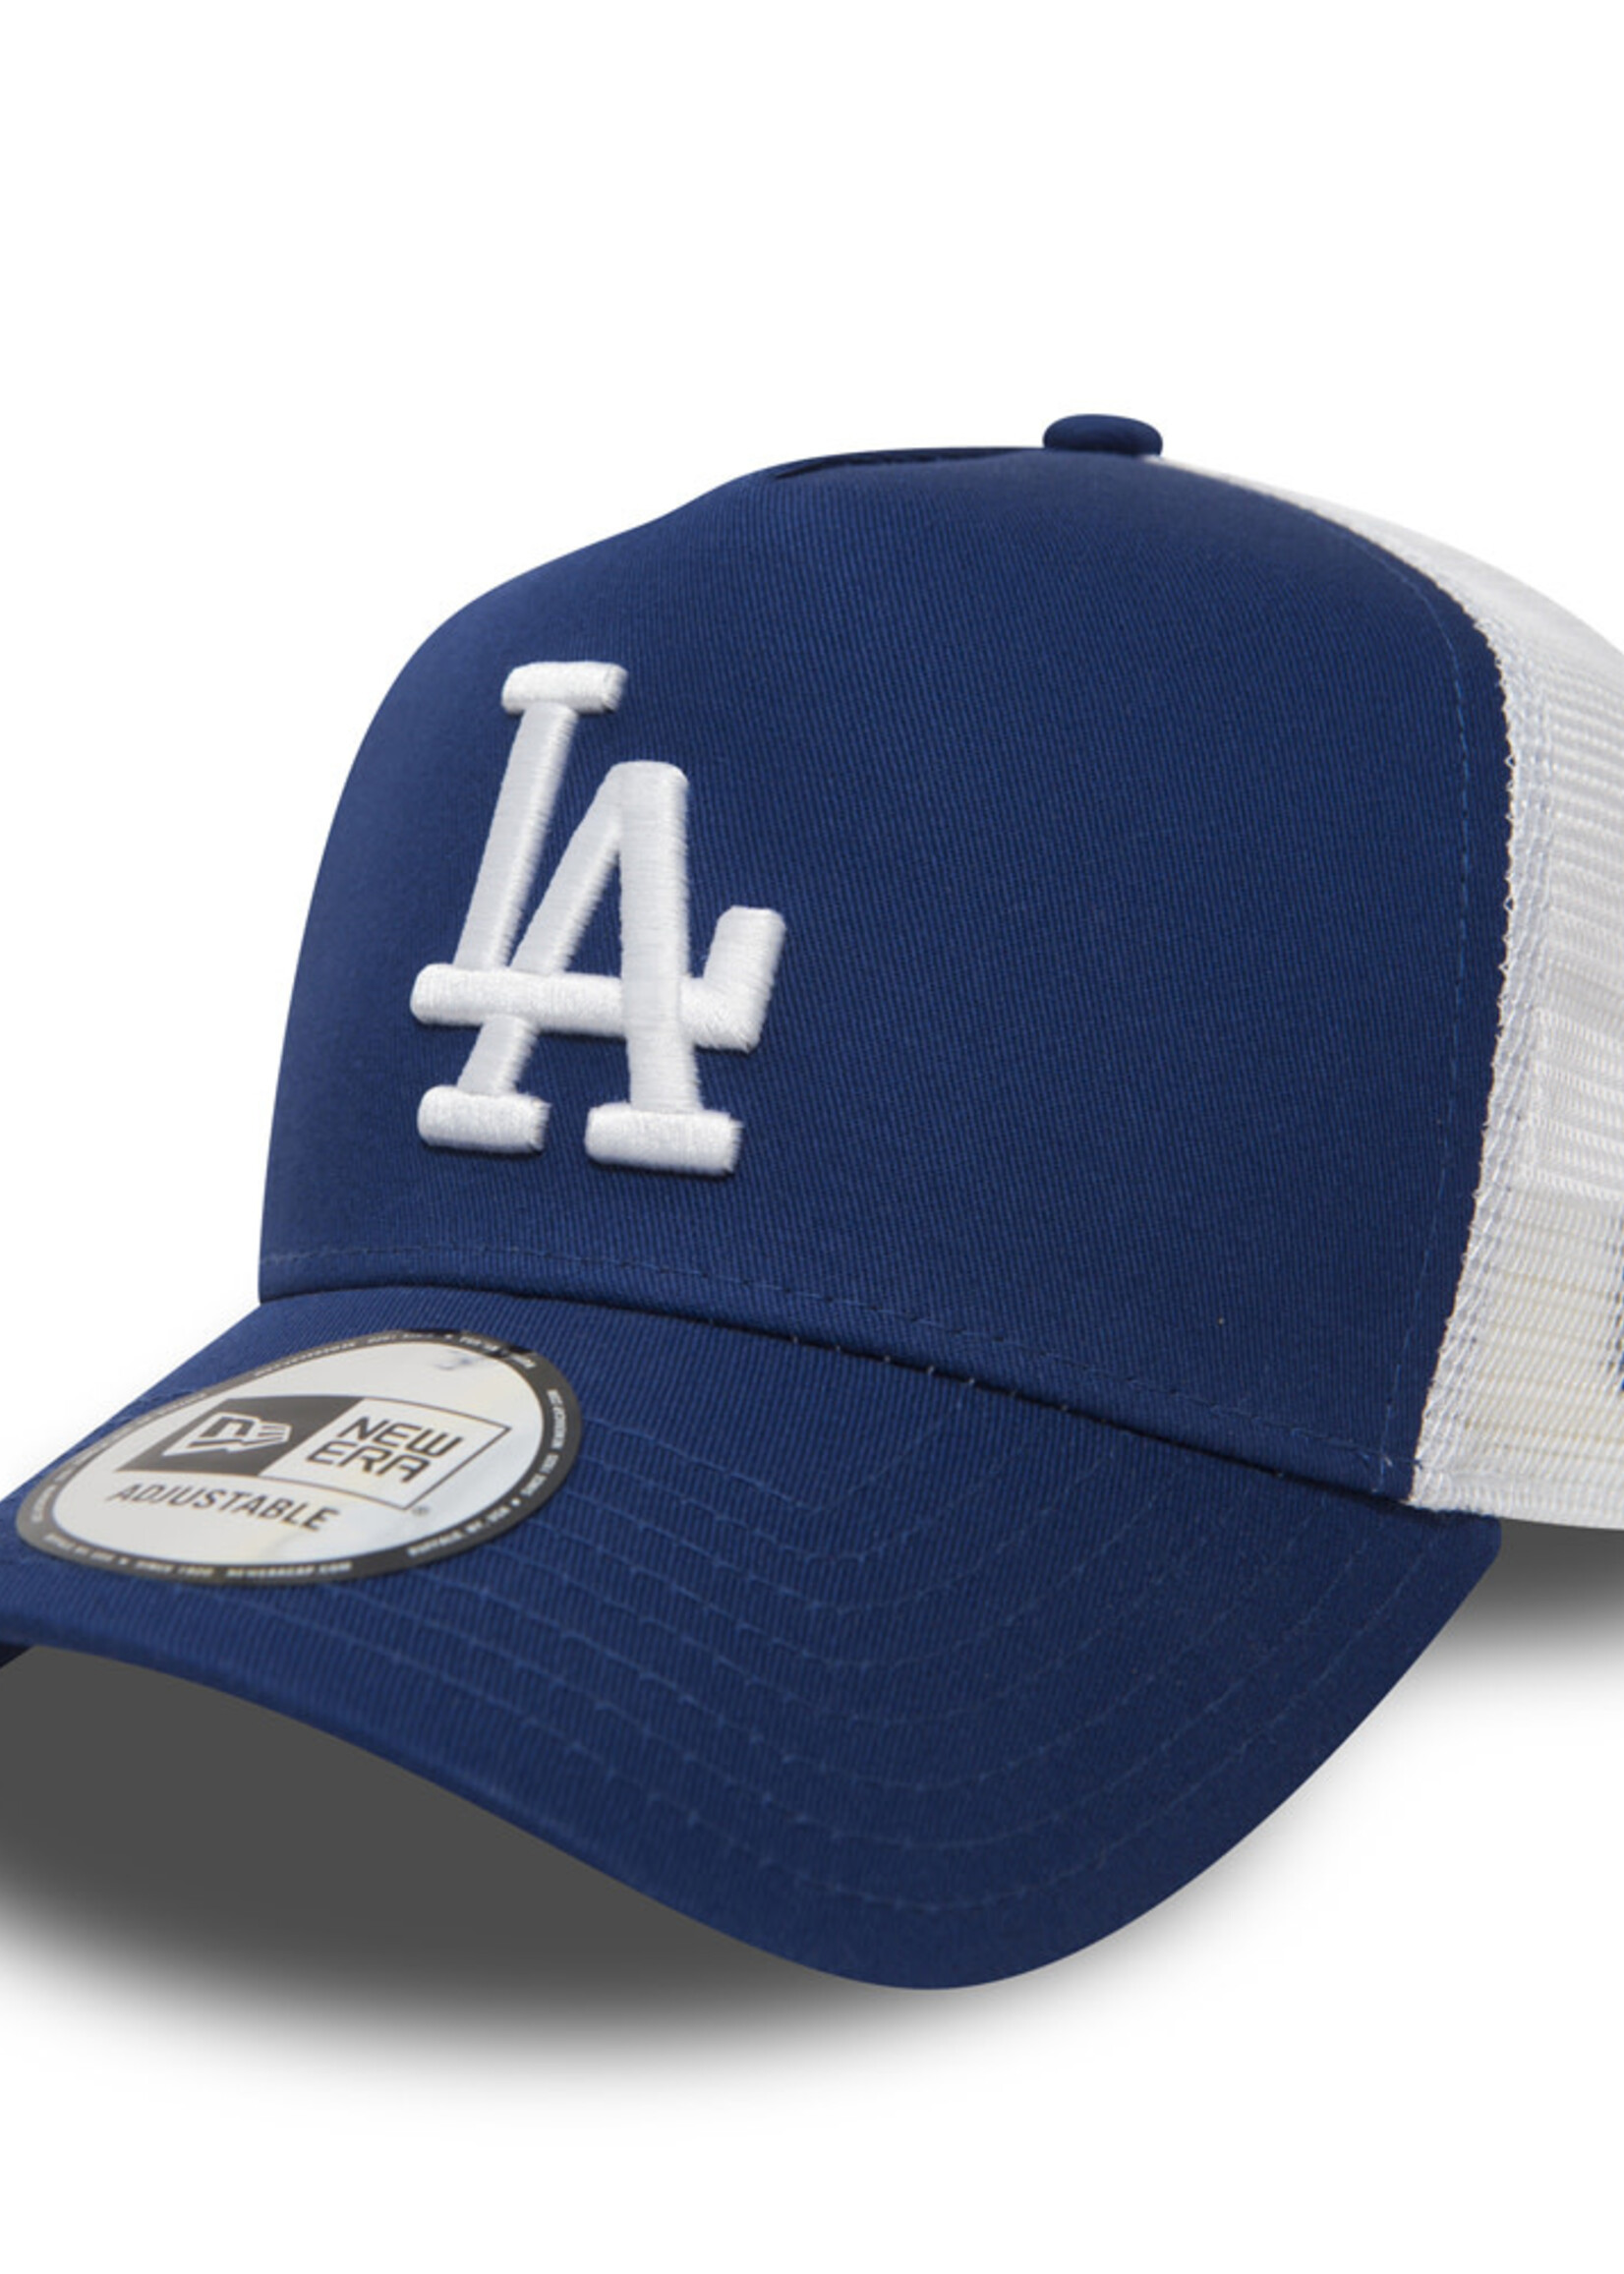 New Era New Era LA Dodgers Trucker Cap Blue White